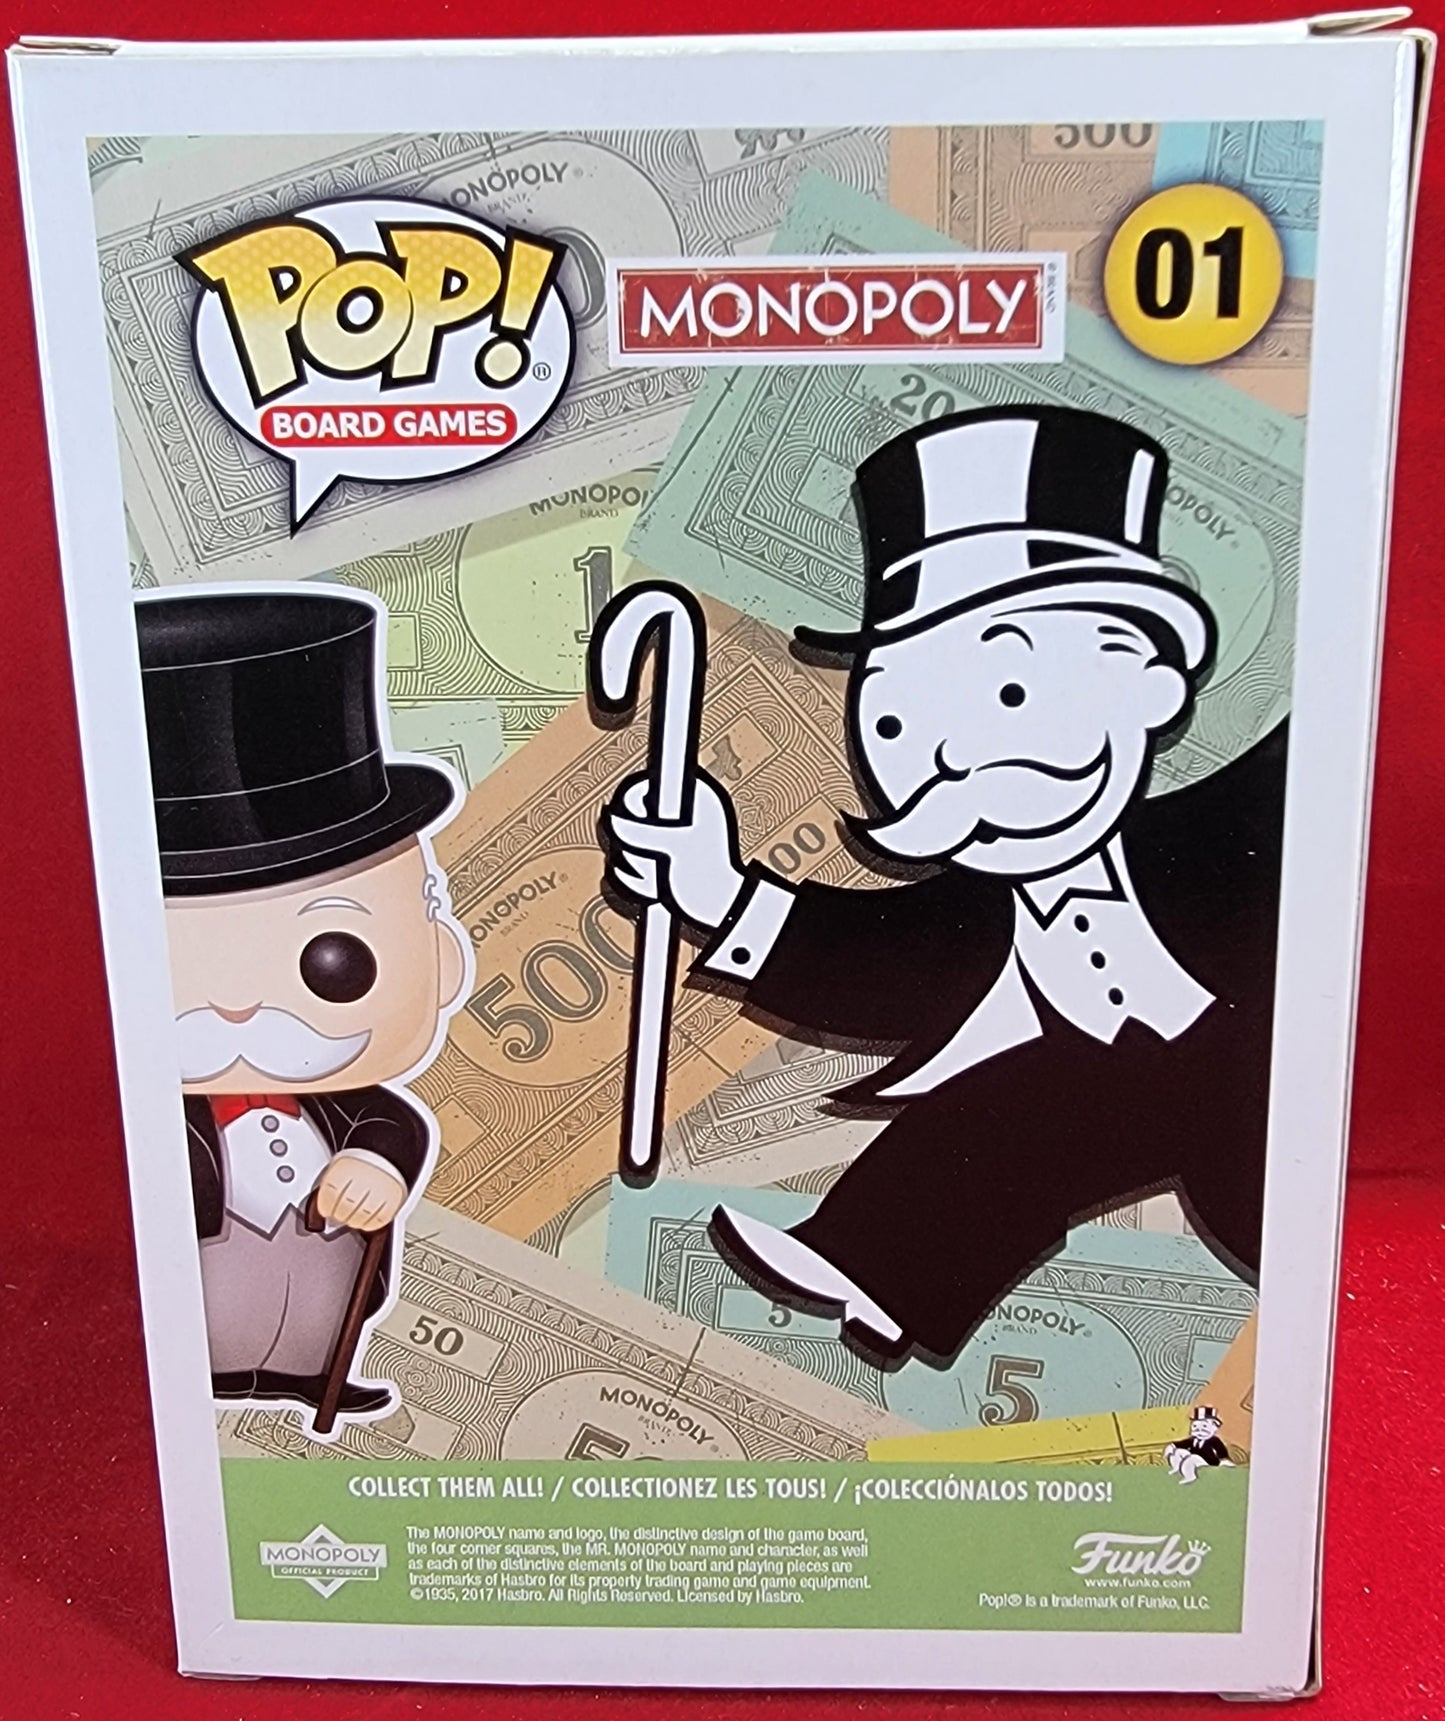 Mr. monopoly funko limited edition # 01 (nib)